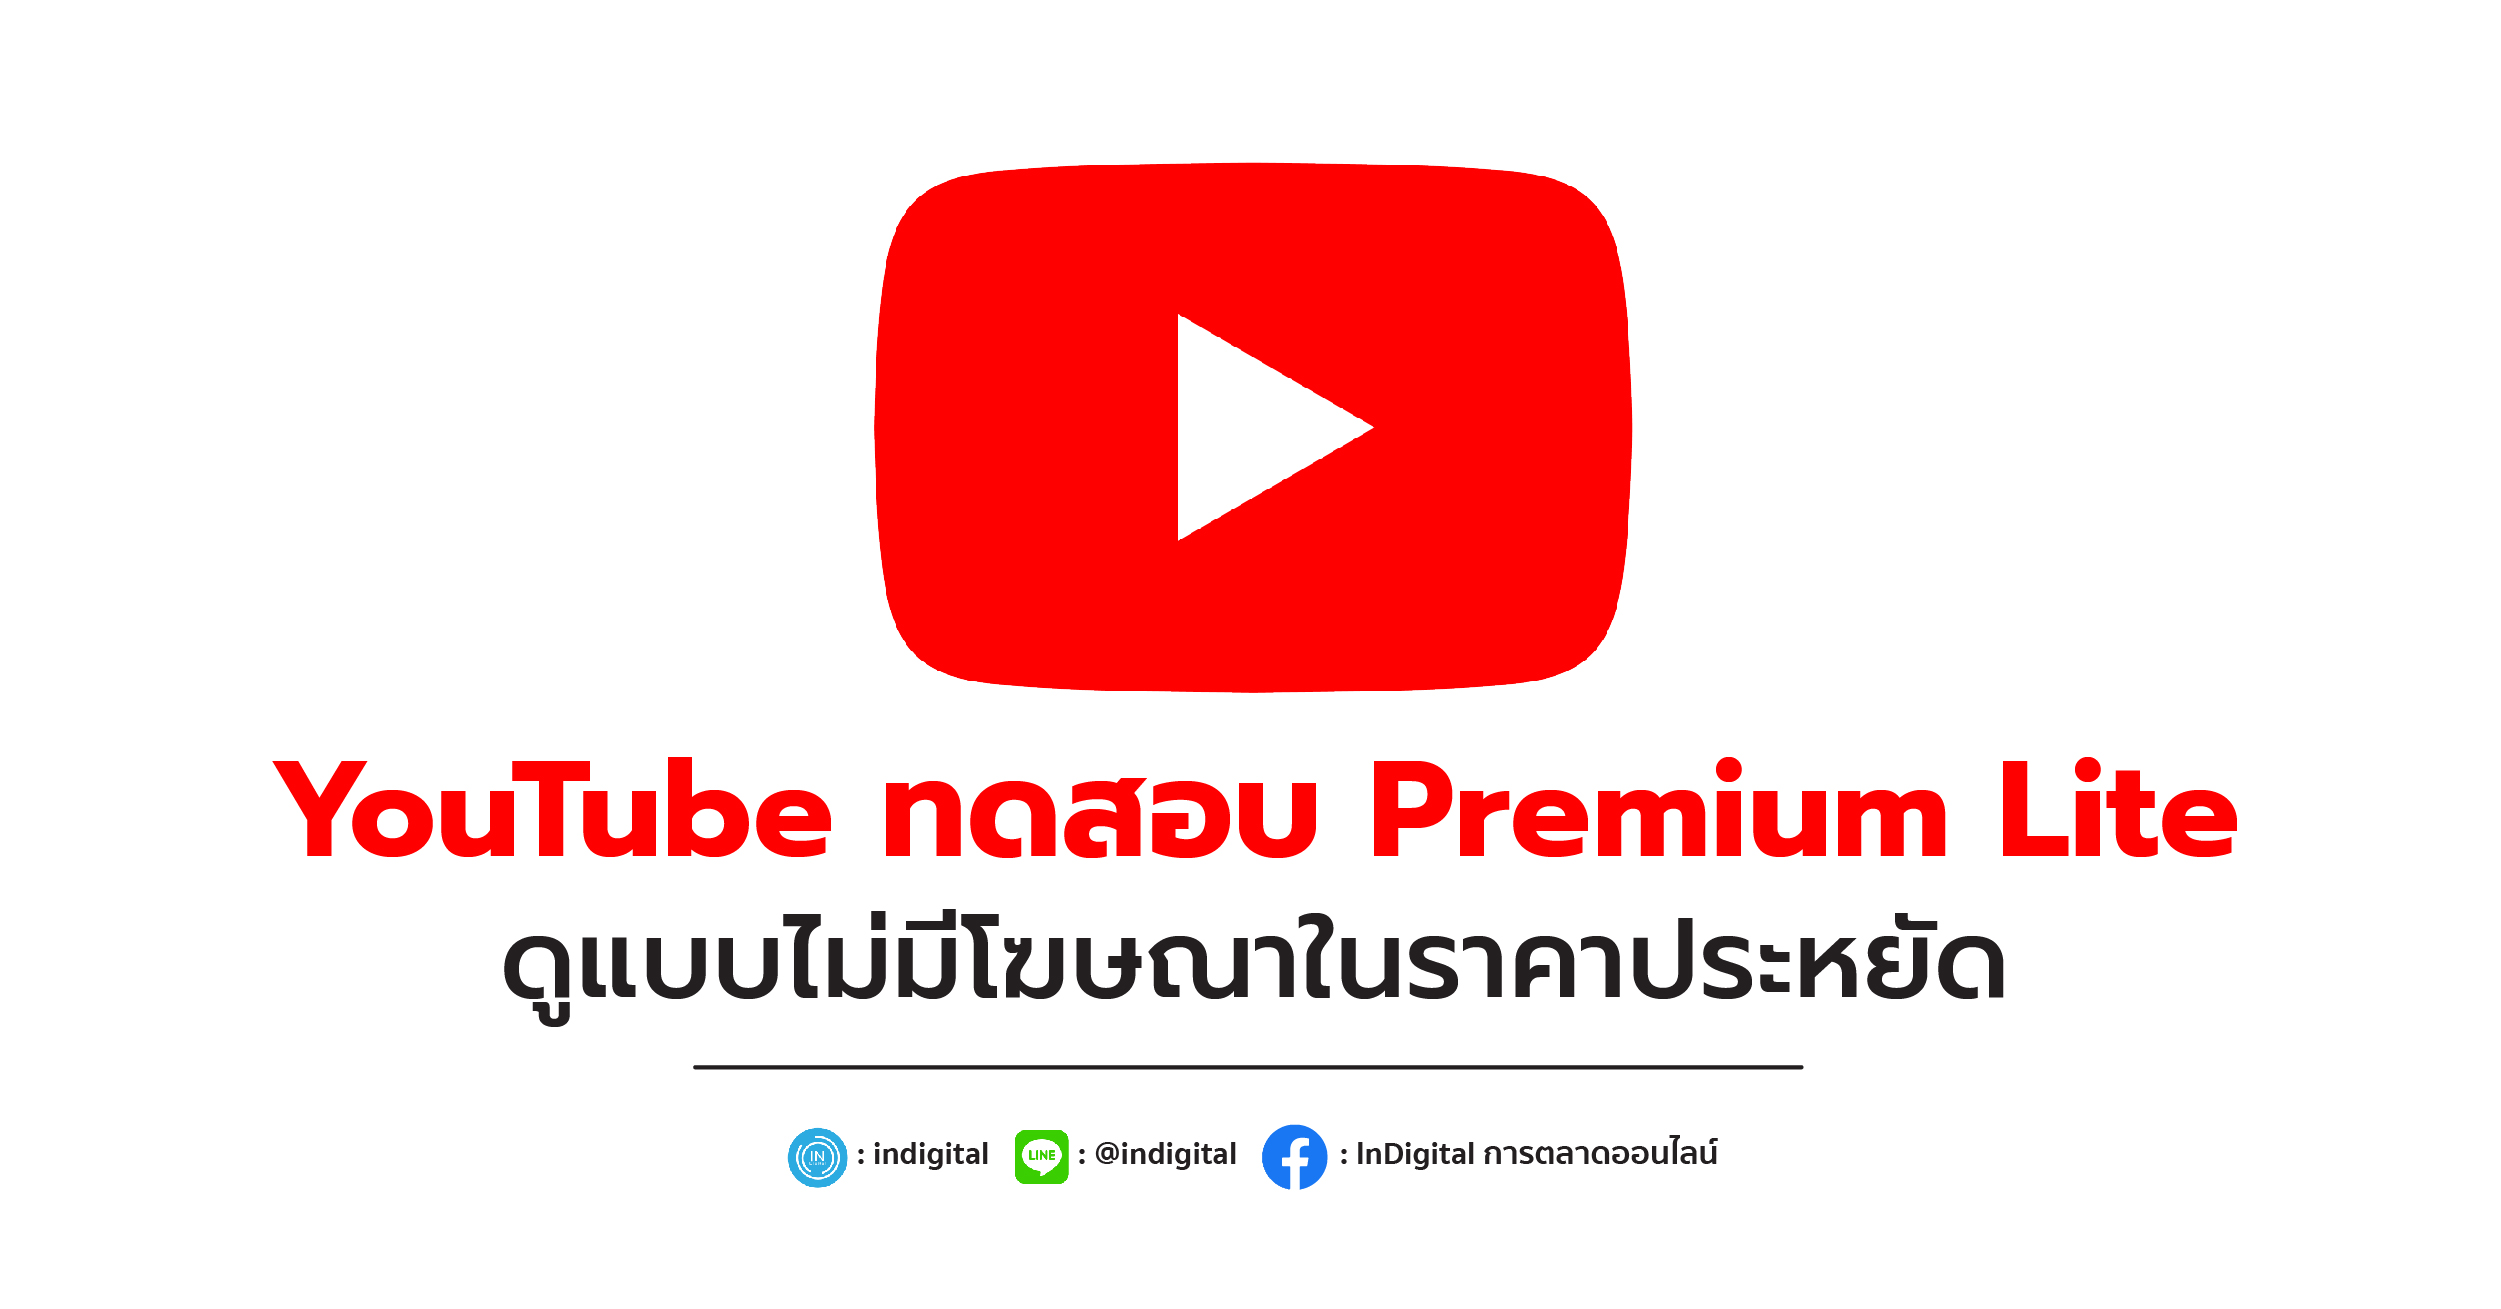 YouTube ทดสอบ Premium Lite ดูแบบไม่มีโฆษณาในราคาประหยัด